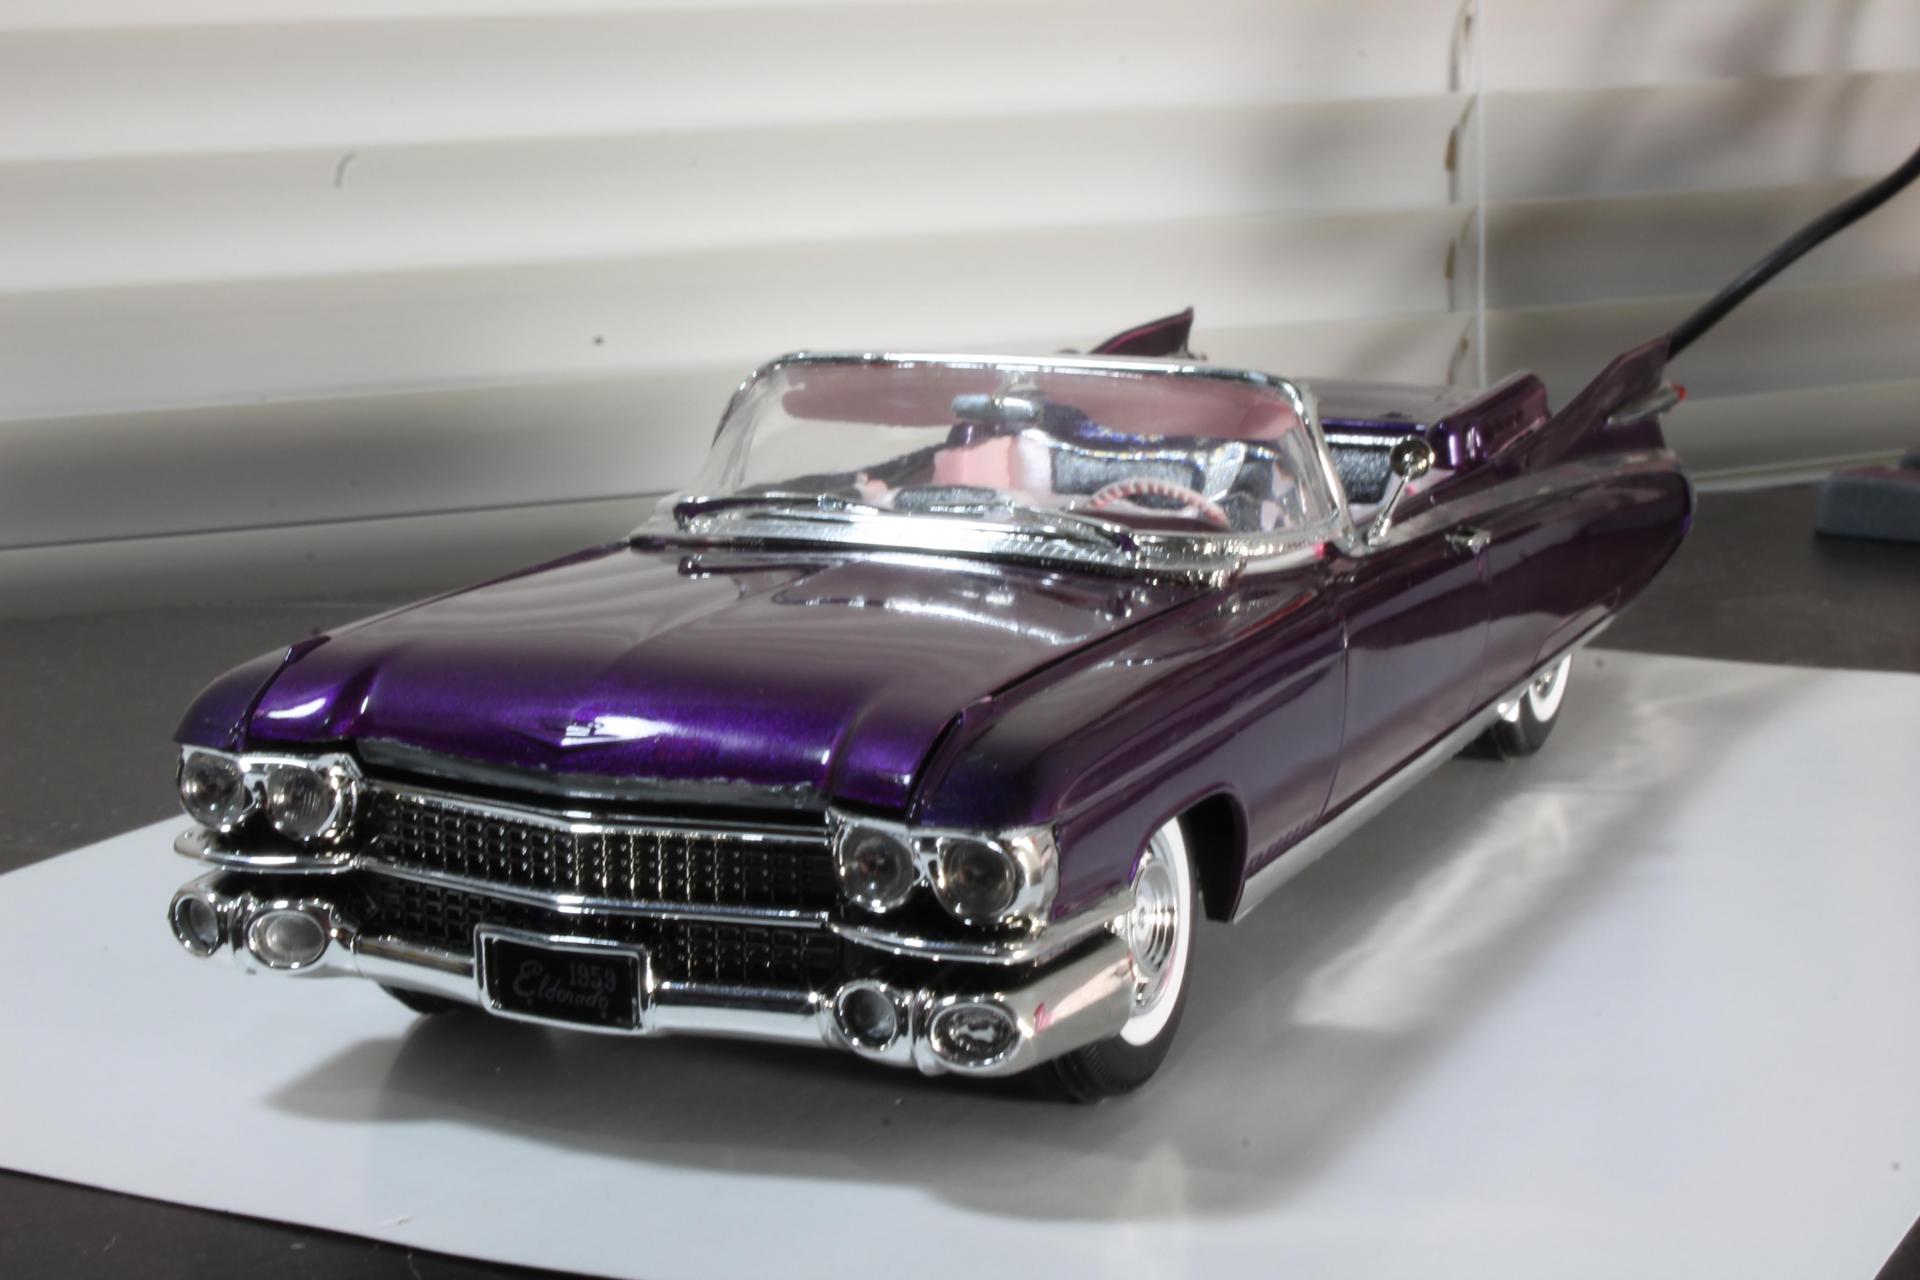 59 Cadillac Eldorado Hardtop - WIP: Model Cars - Model Cars Magazine Forum
